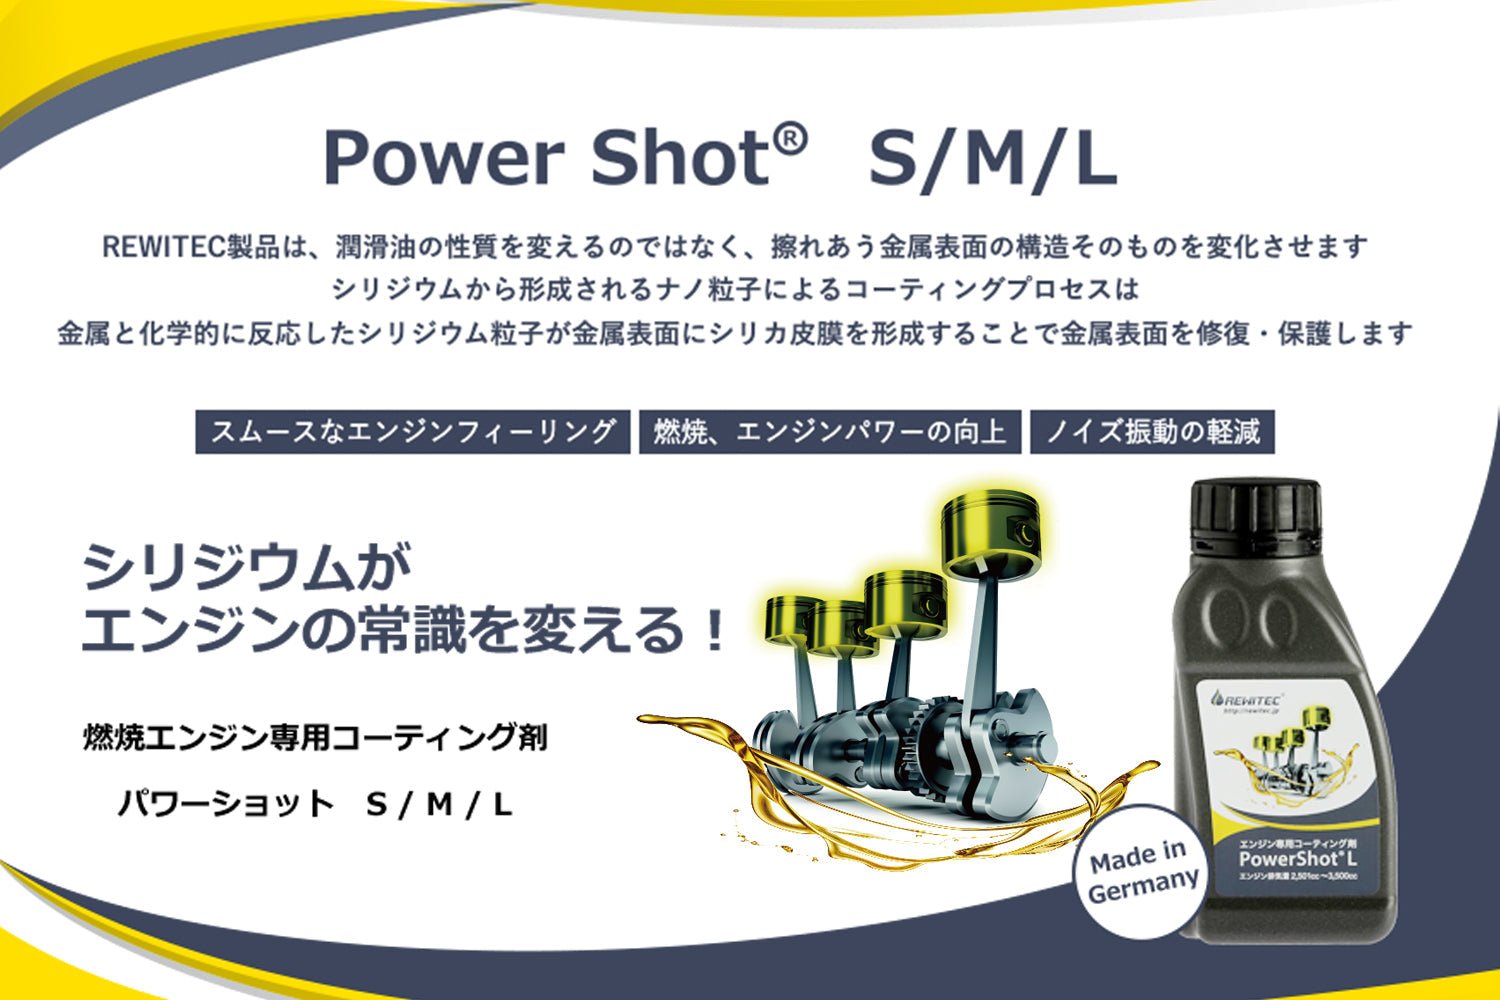 REWITEC Power Shot L